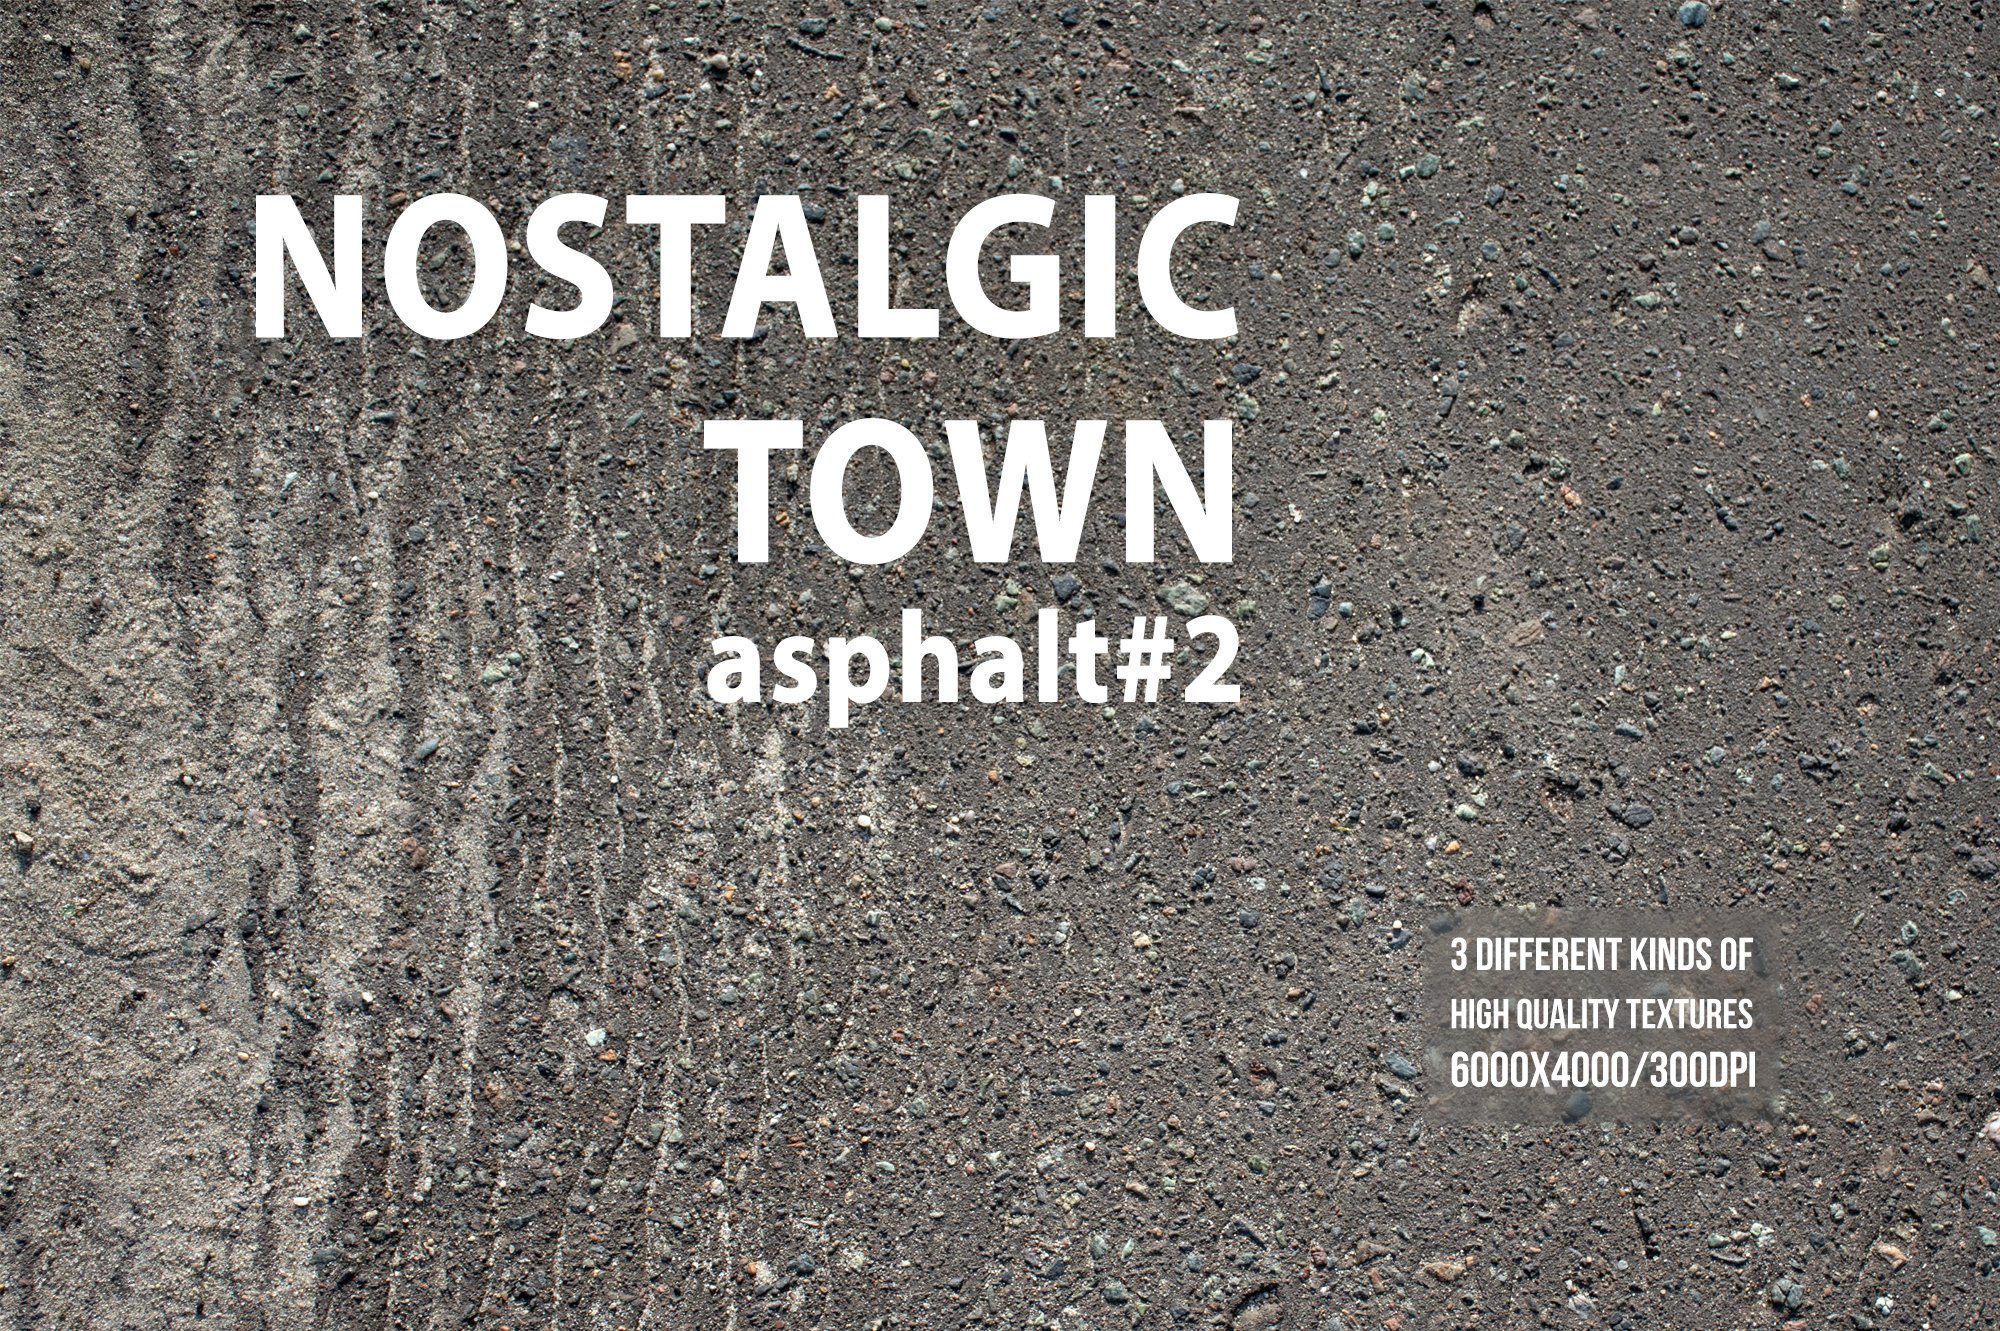 Nostalgic Town: Asphalt#2 cover image.